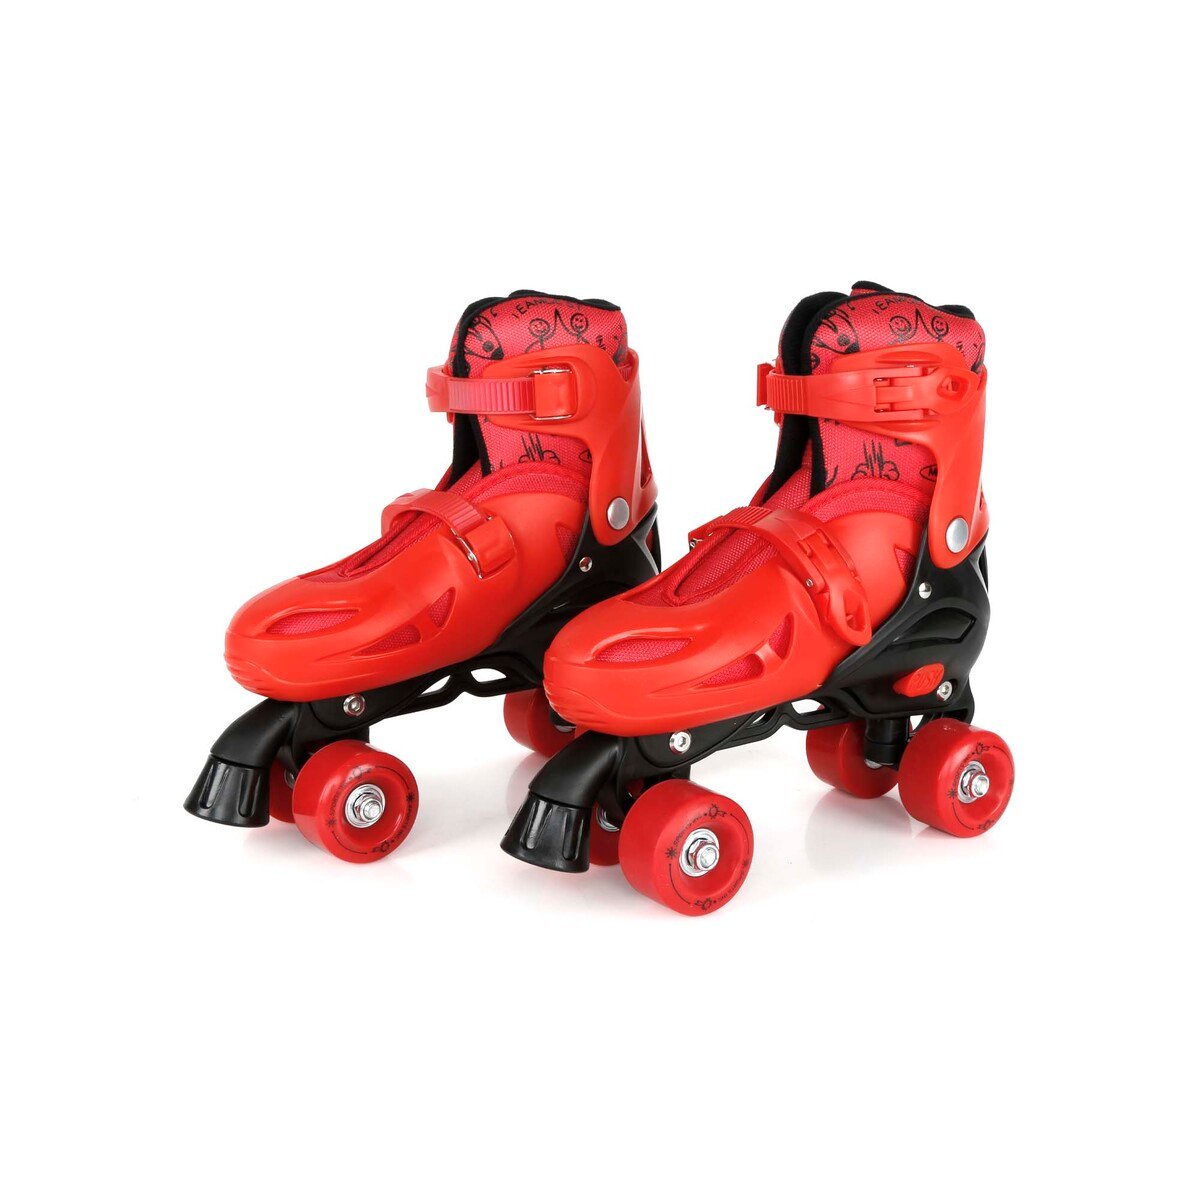 Sports Inc Skating Shoe, TE-725, Red, Medium